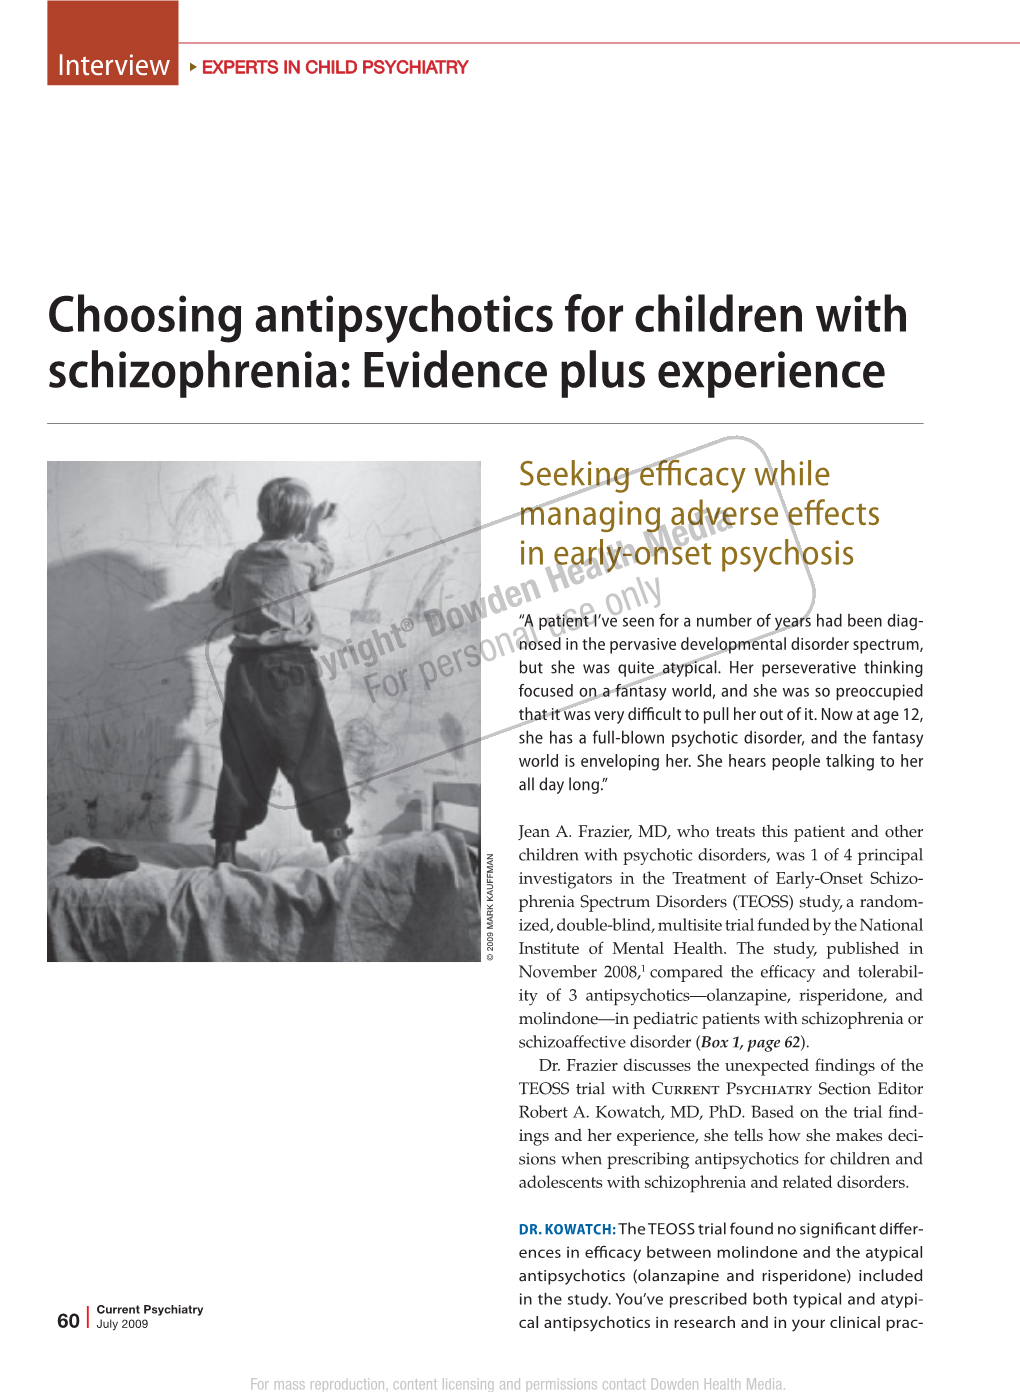 Choosing Antipsychotics for Children with Schizophrenia: Evidence Plus Experience